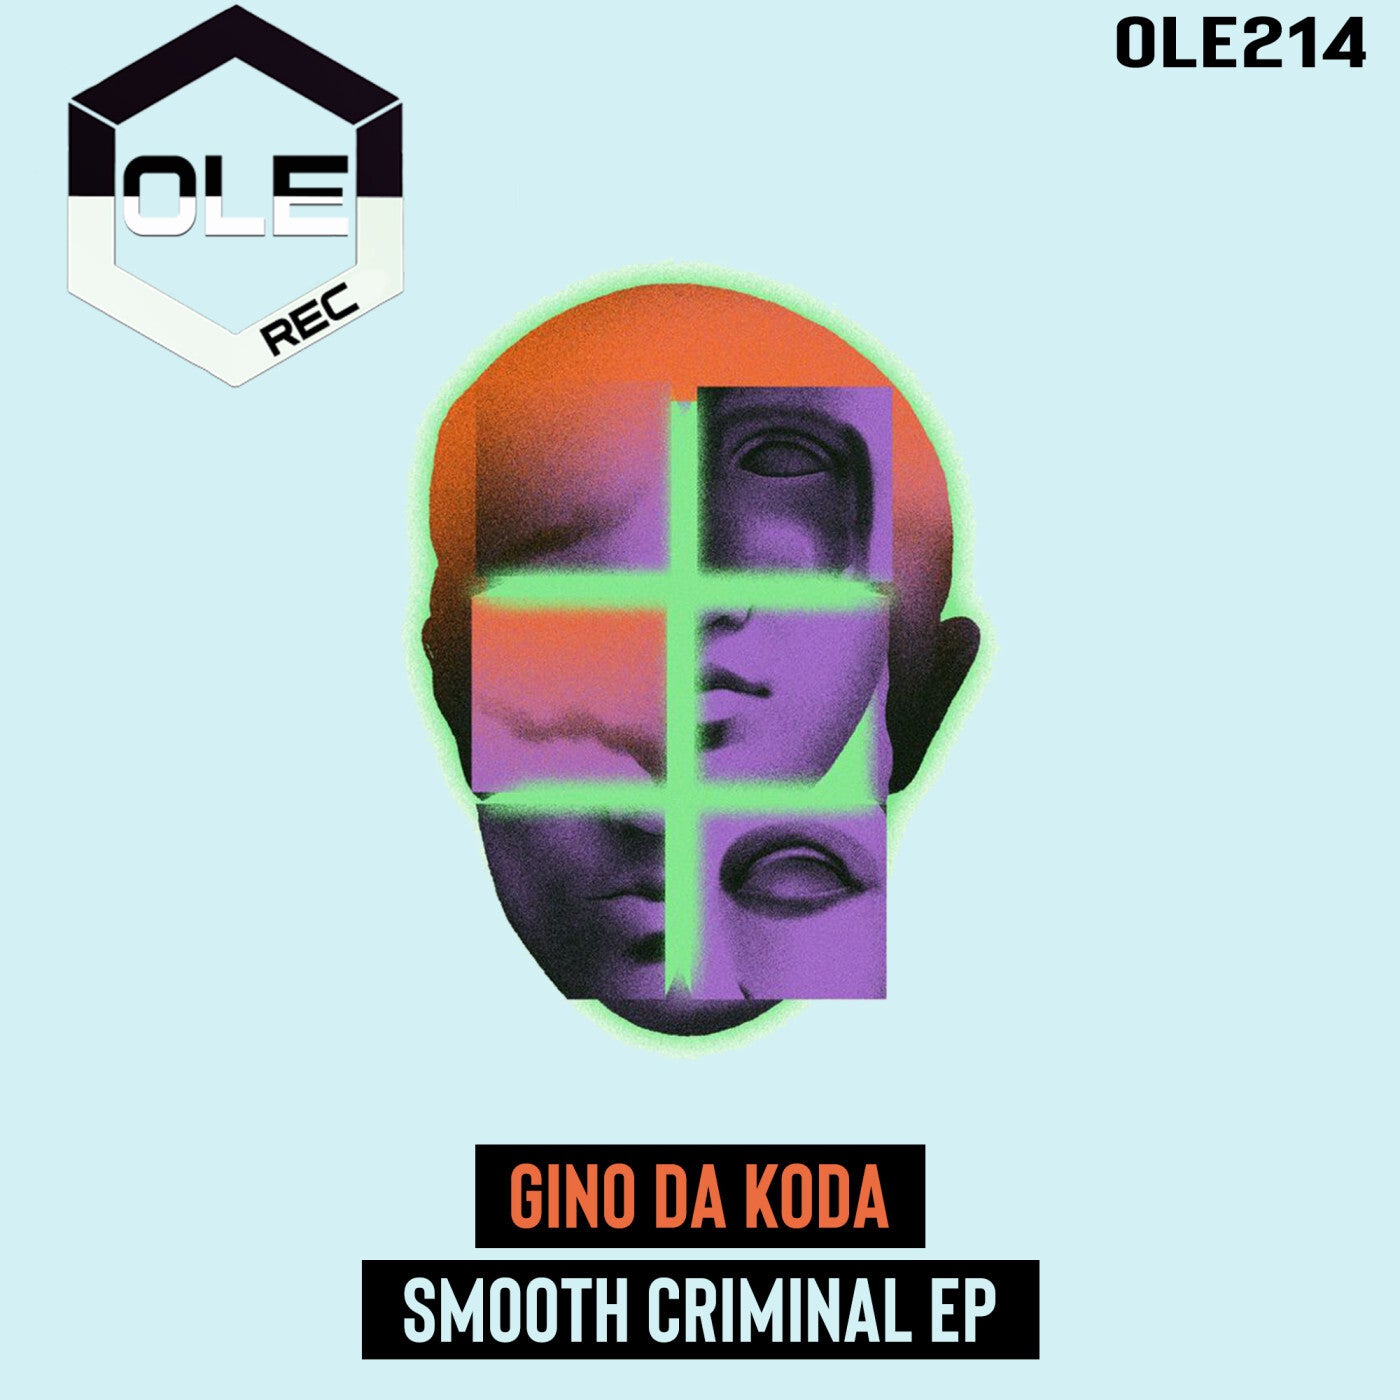 Smooth Criminal EP